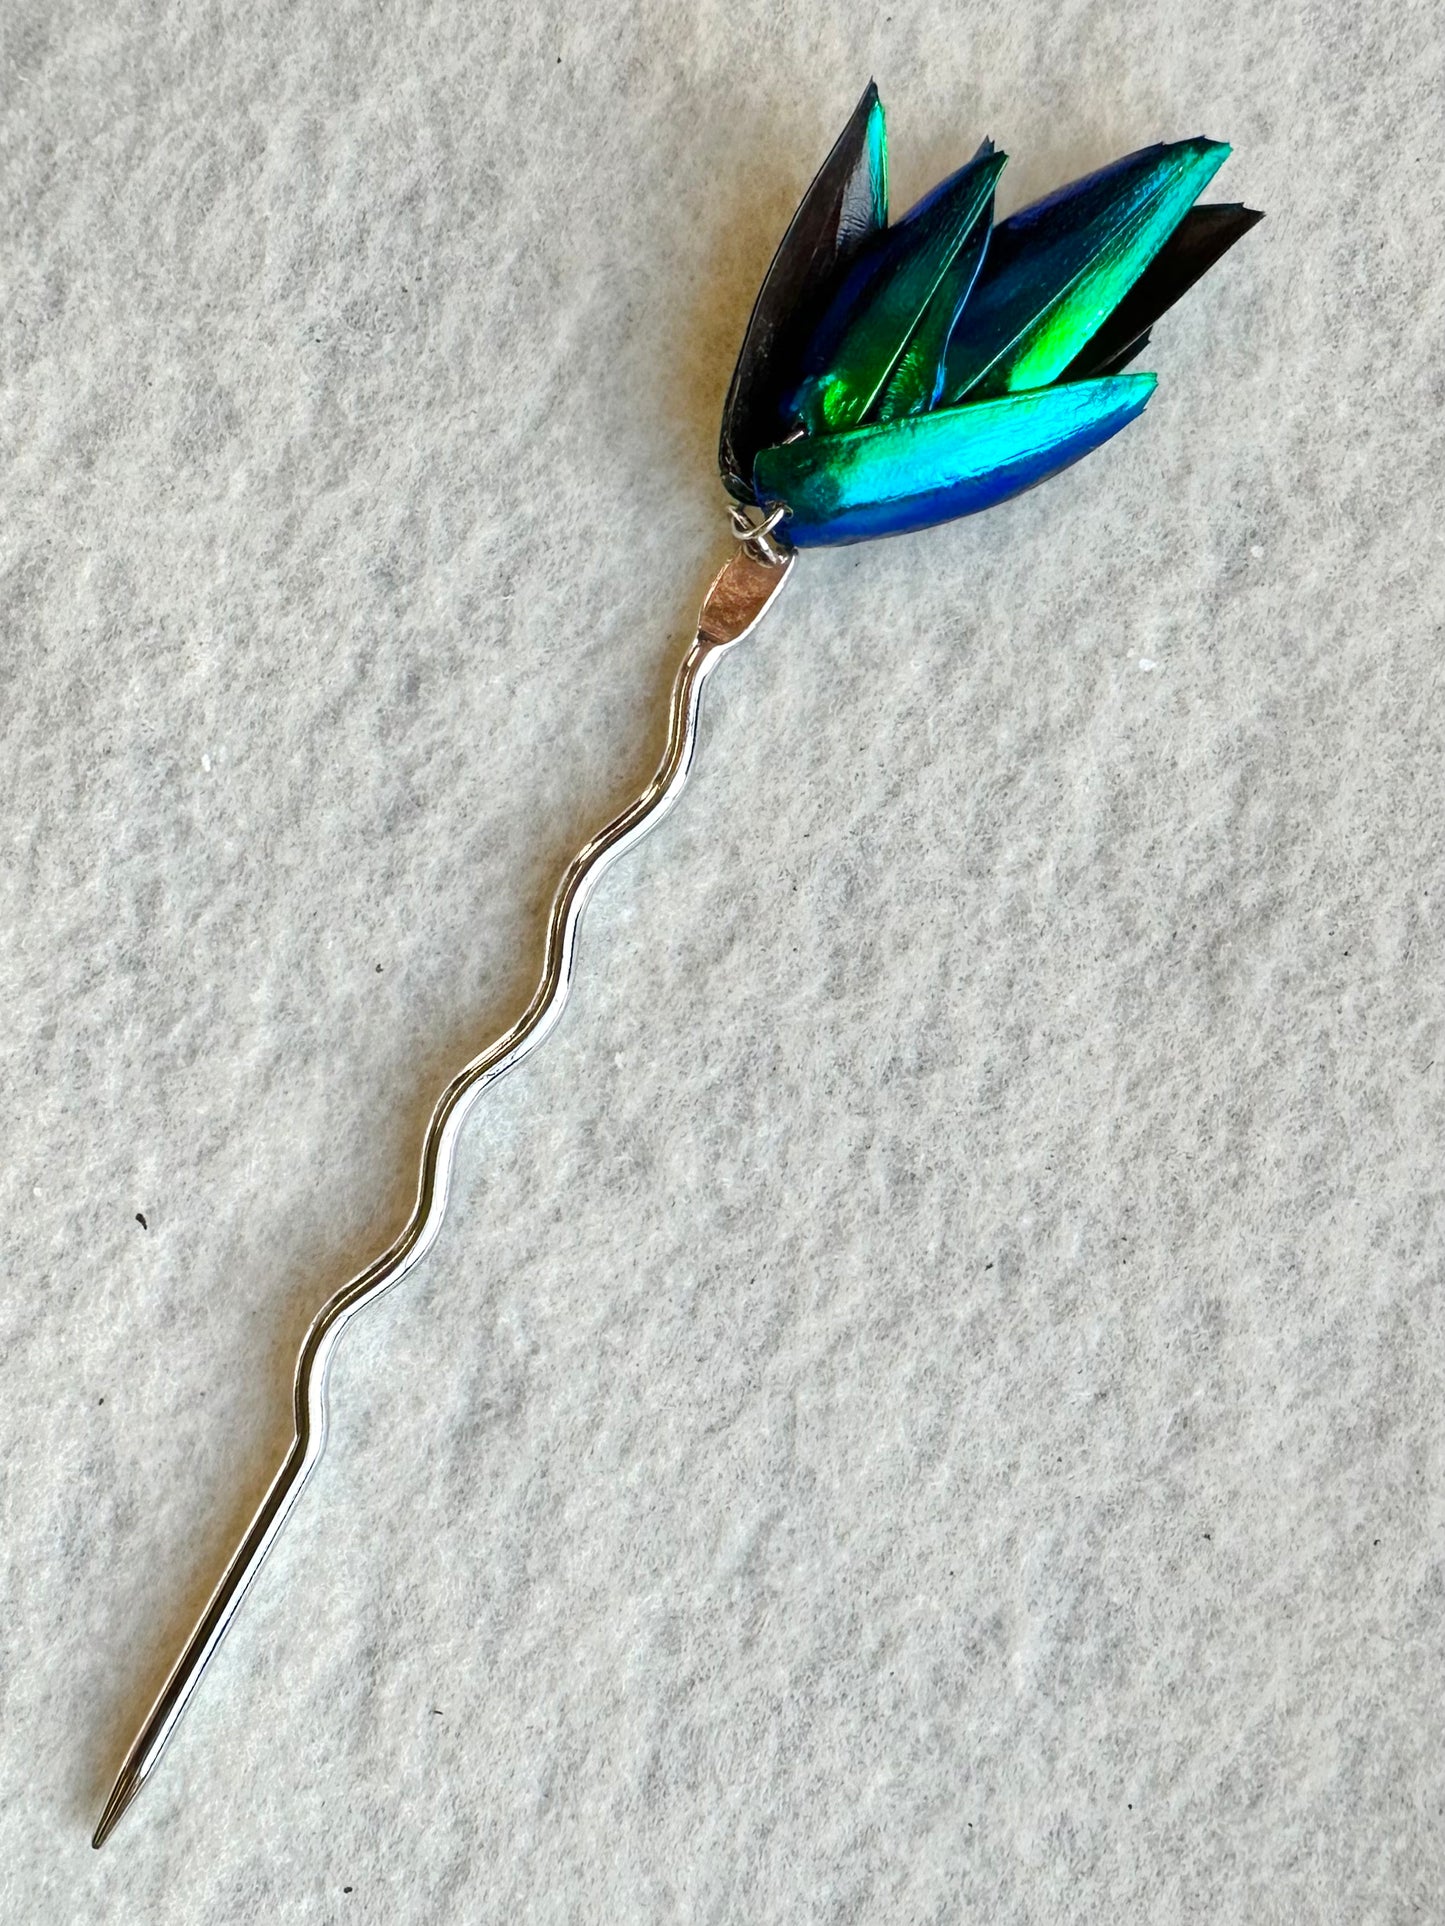 Bundle of Real Wing Hair Pin made from Elytra Beetles